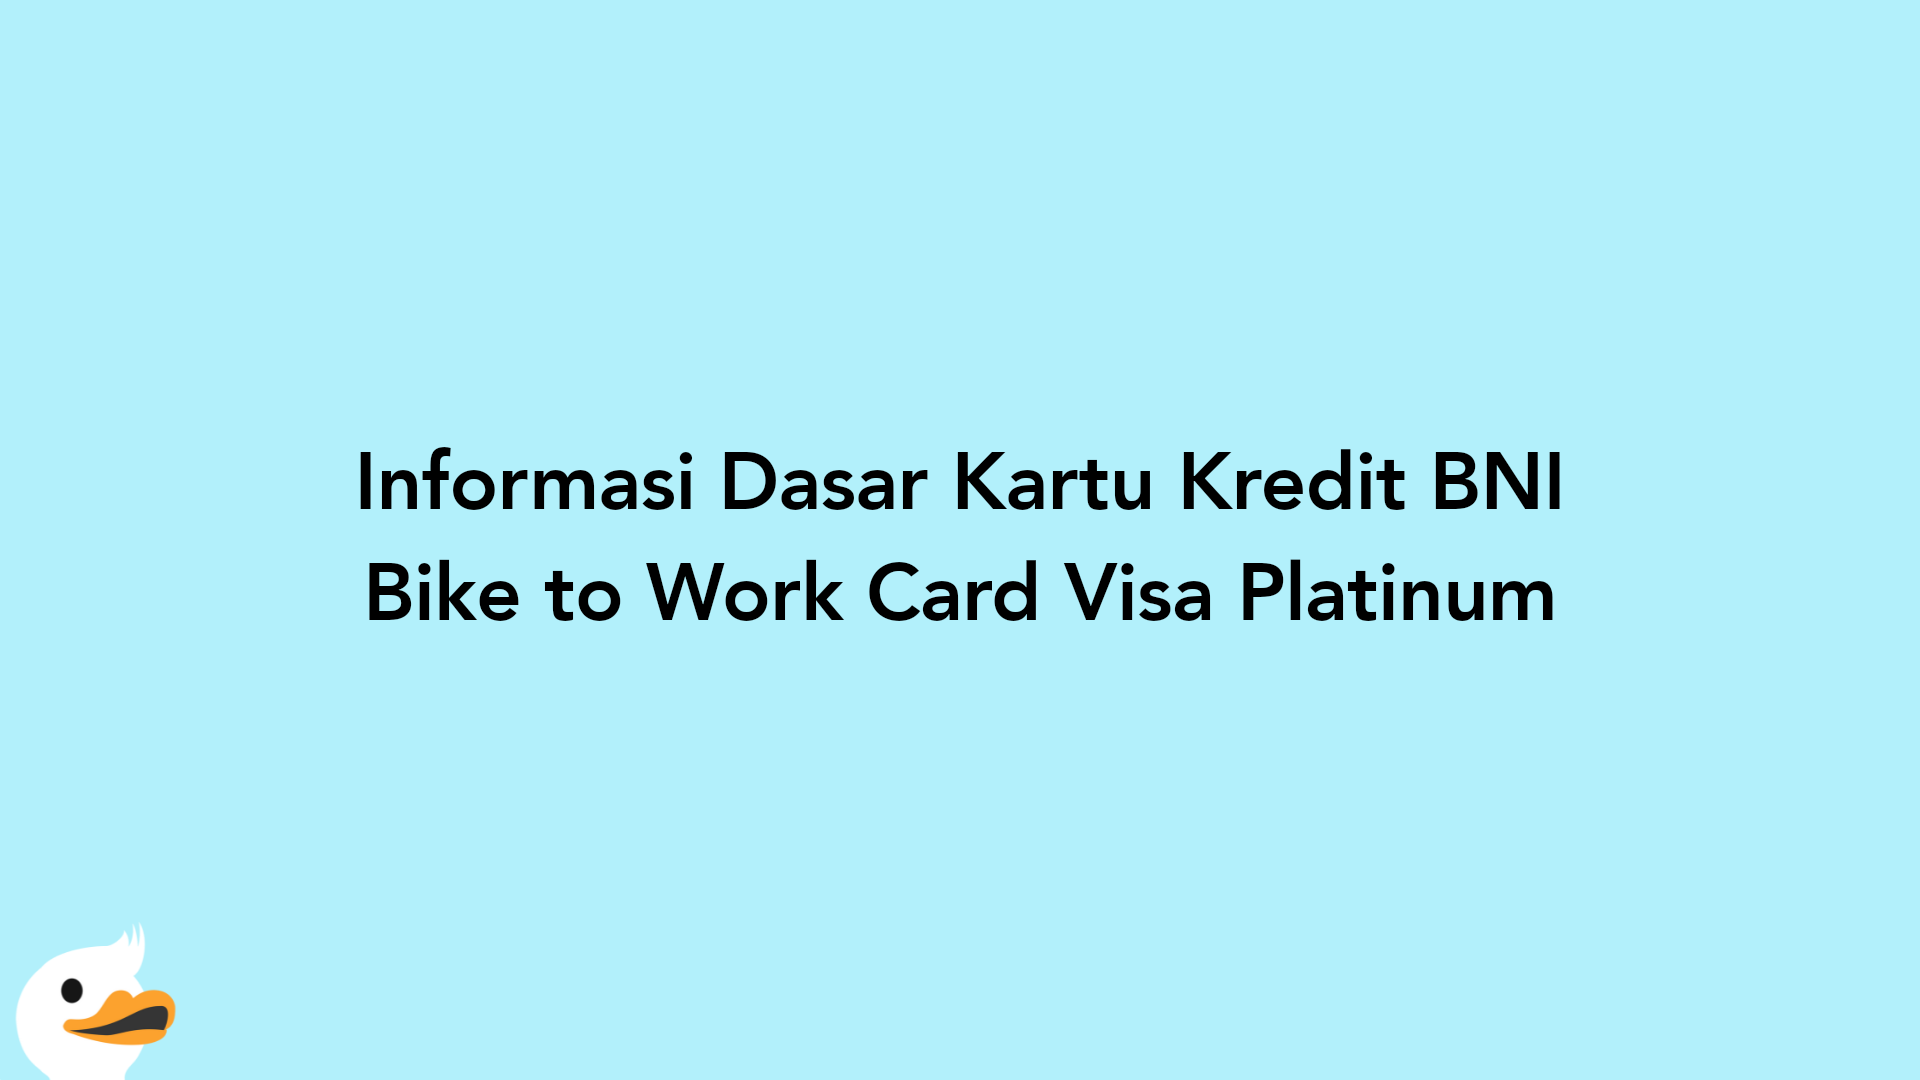 Informasi Dasar Kartu Kredit BNI Bike to Work Card Visa Platinum